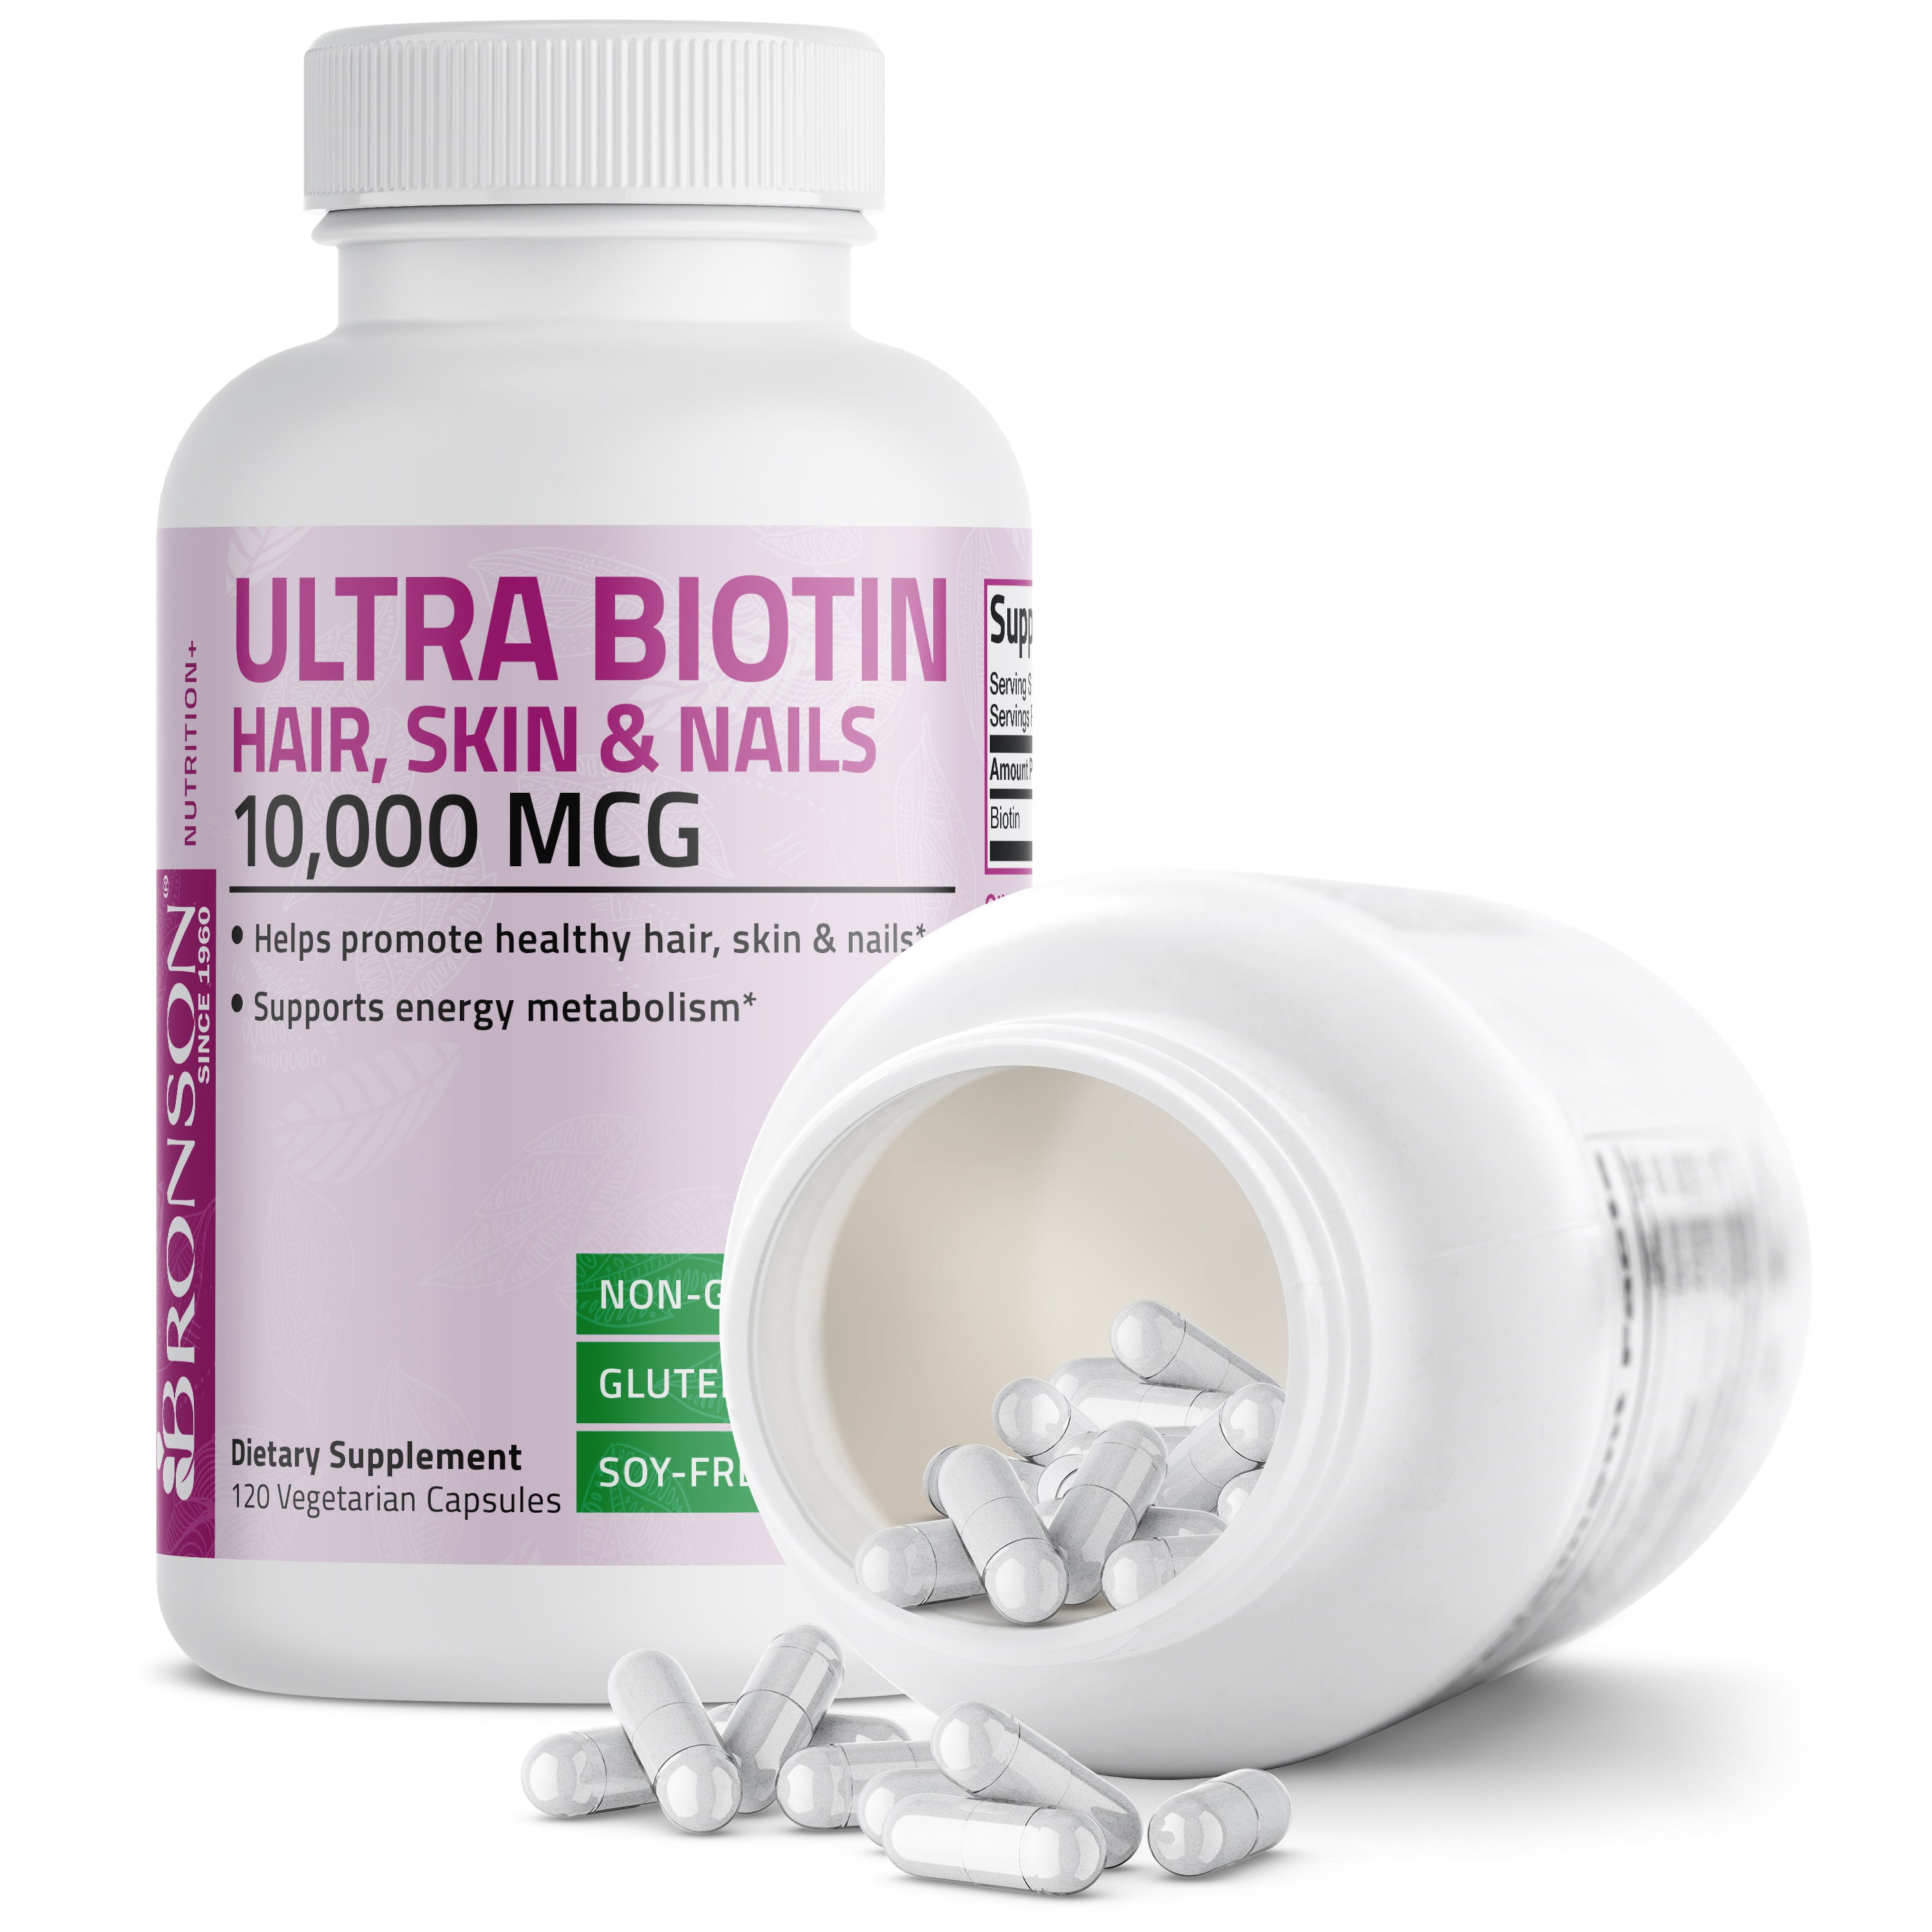 Ultra Biotin Hair, Skin & Nails - 10,000 mcg view 5 of 14